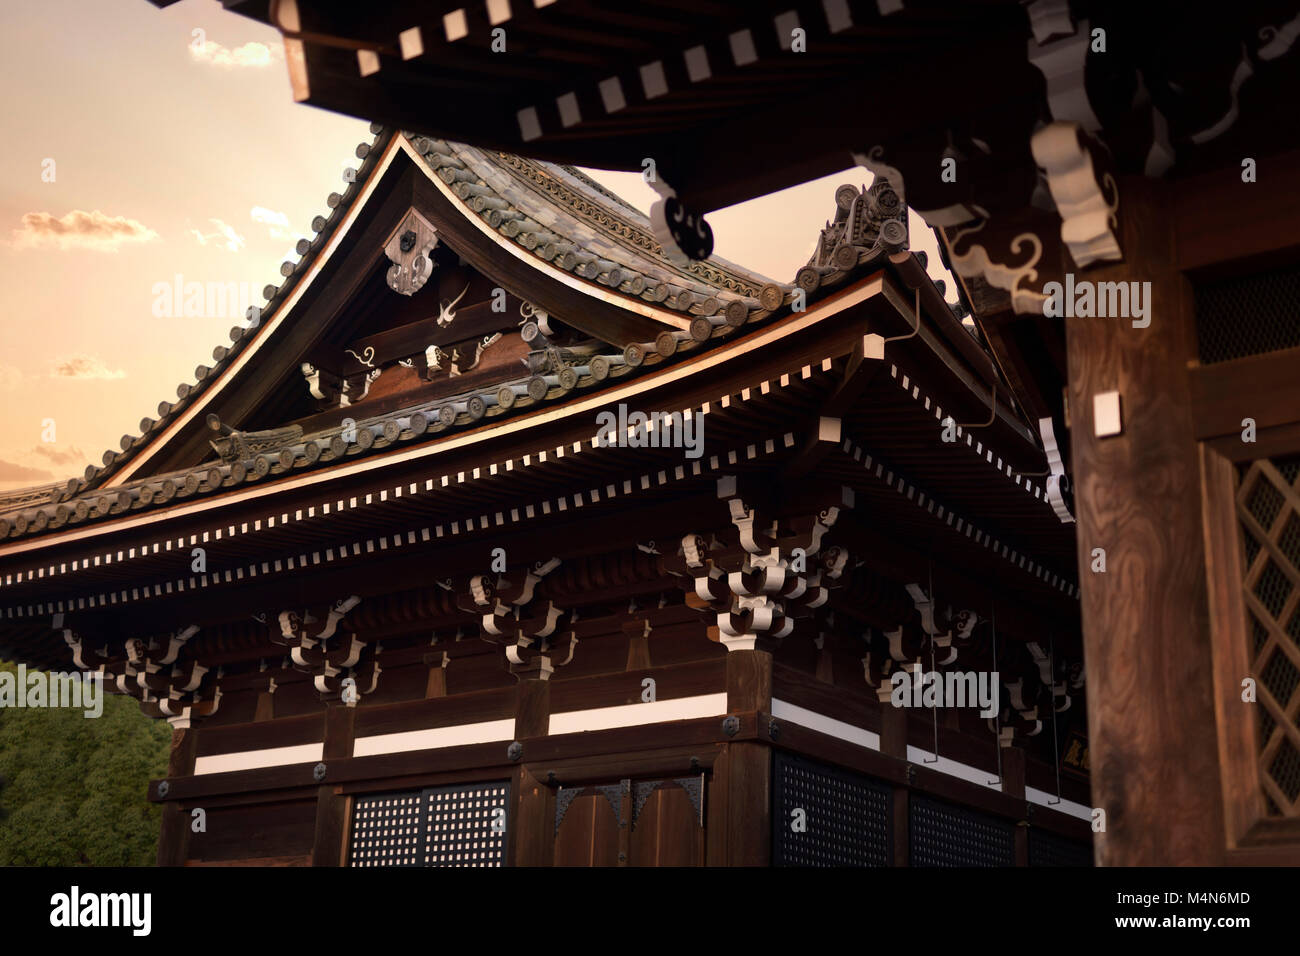 Roof detail of Asakura-do Hall of Kiyomizu-dera Buddhist temple, Japanese traditional architecture. Kyoto, Japan Stock Photo